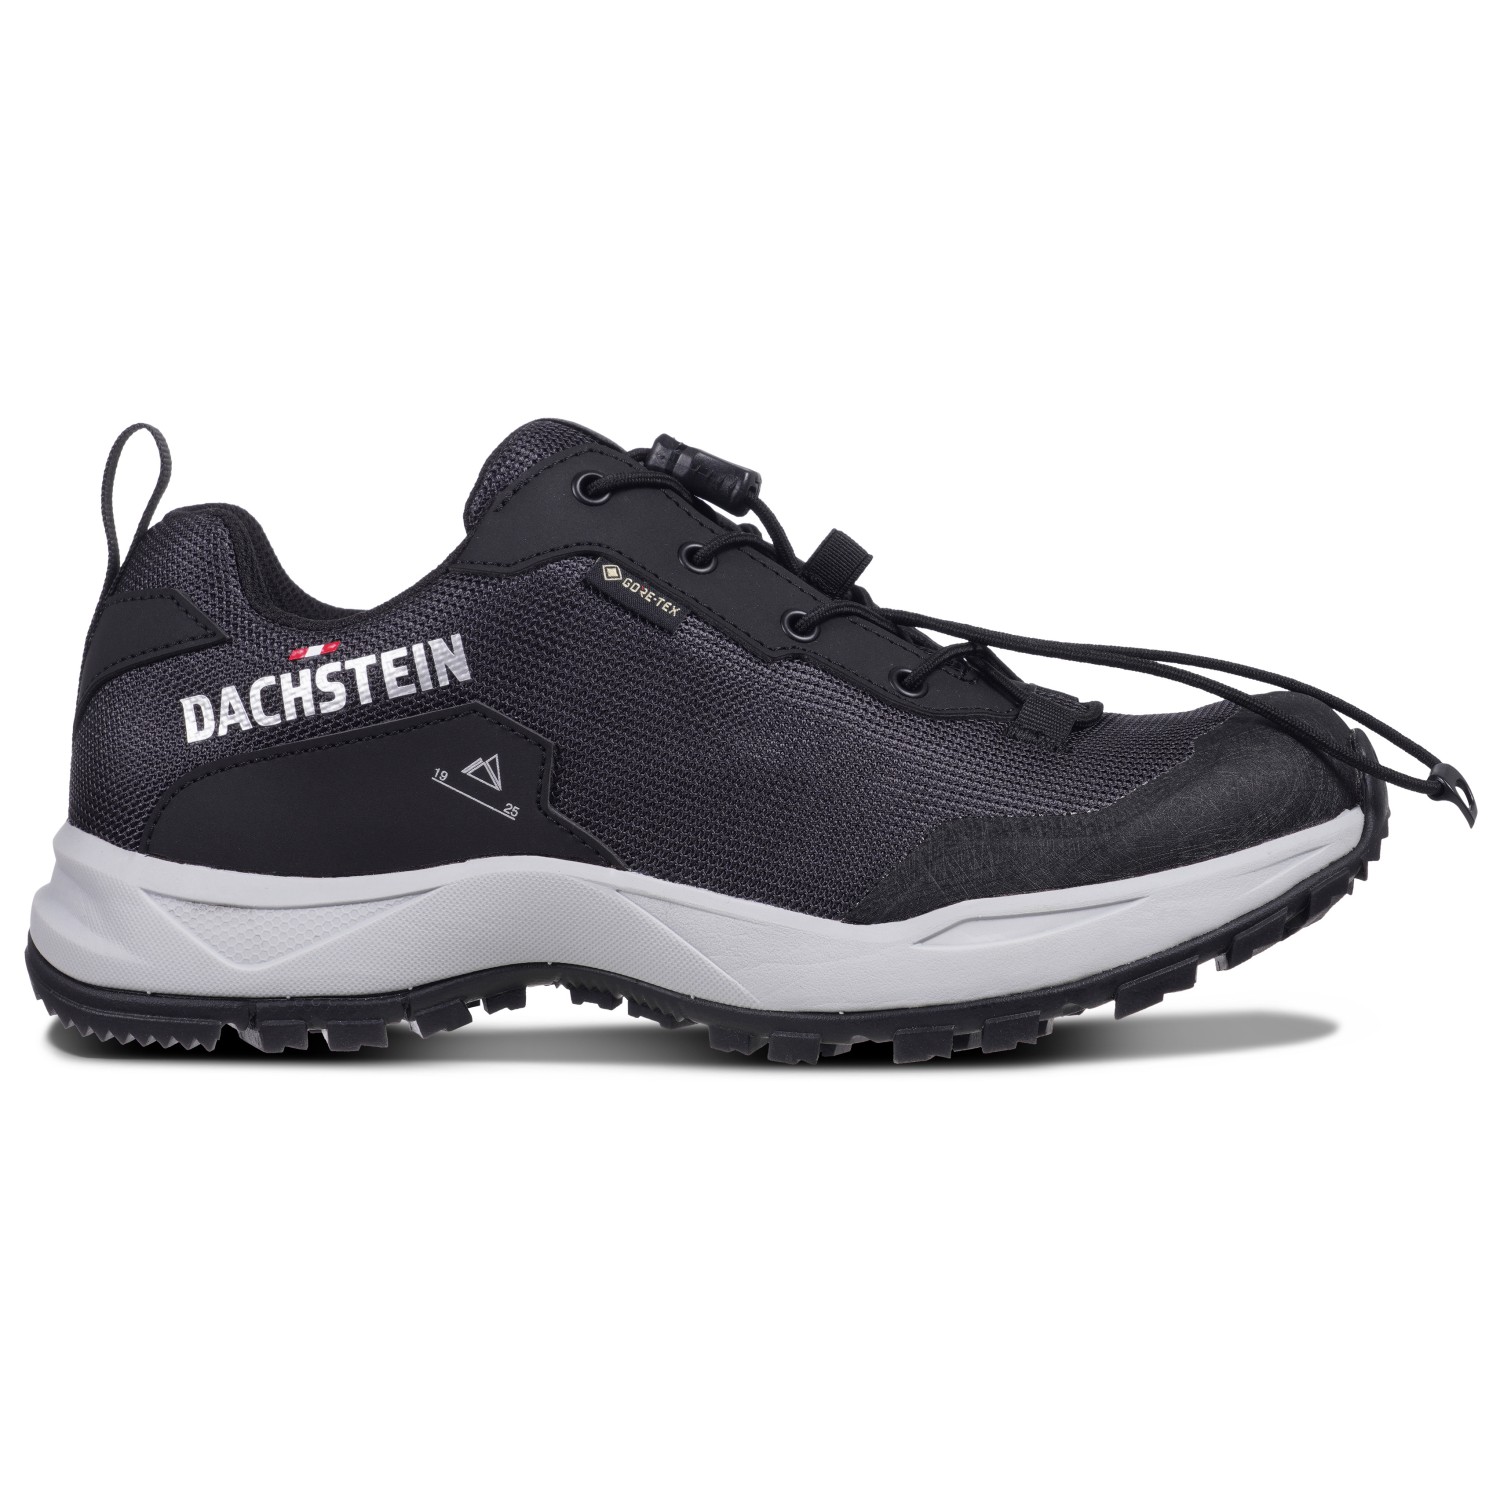 Мультиспортивная обувь Dachstein Women's Delta Ascent GTX, черный